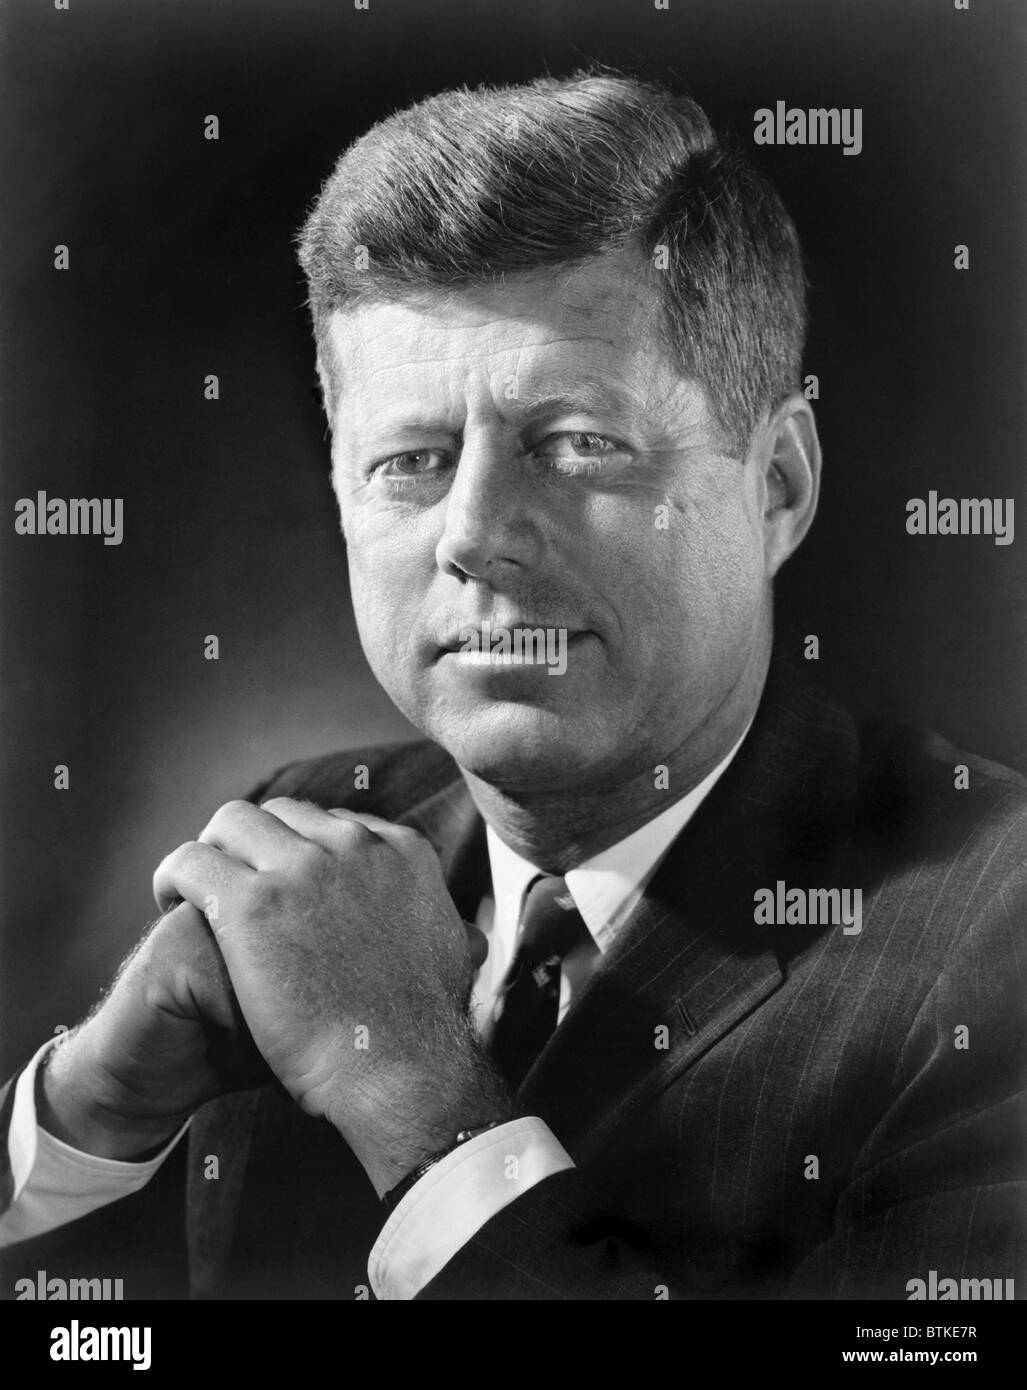 President John F. Kennedy in a 1961 portrait Stock Photo - Alamy